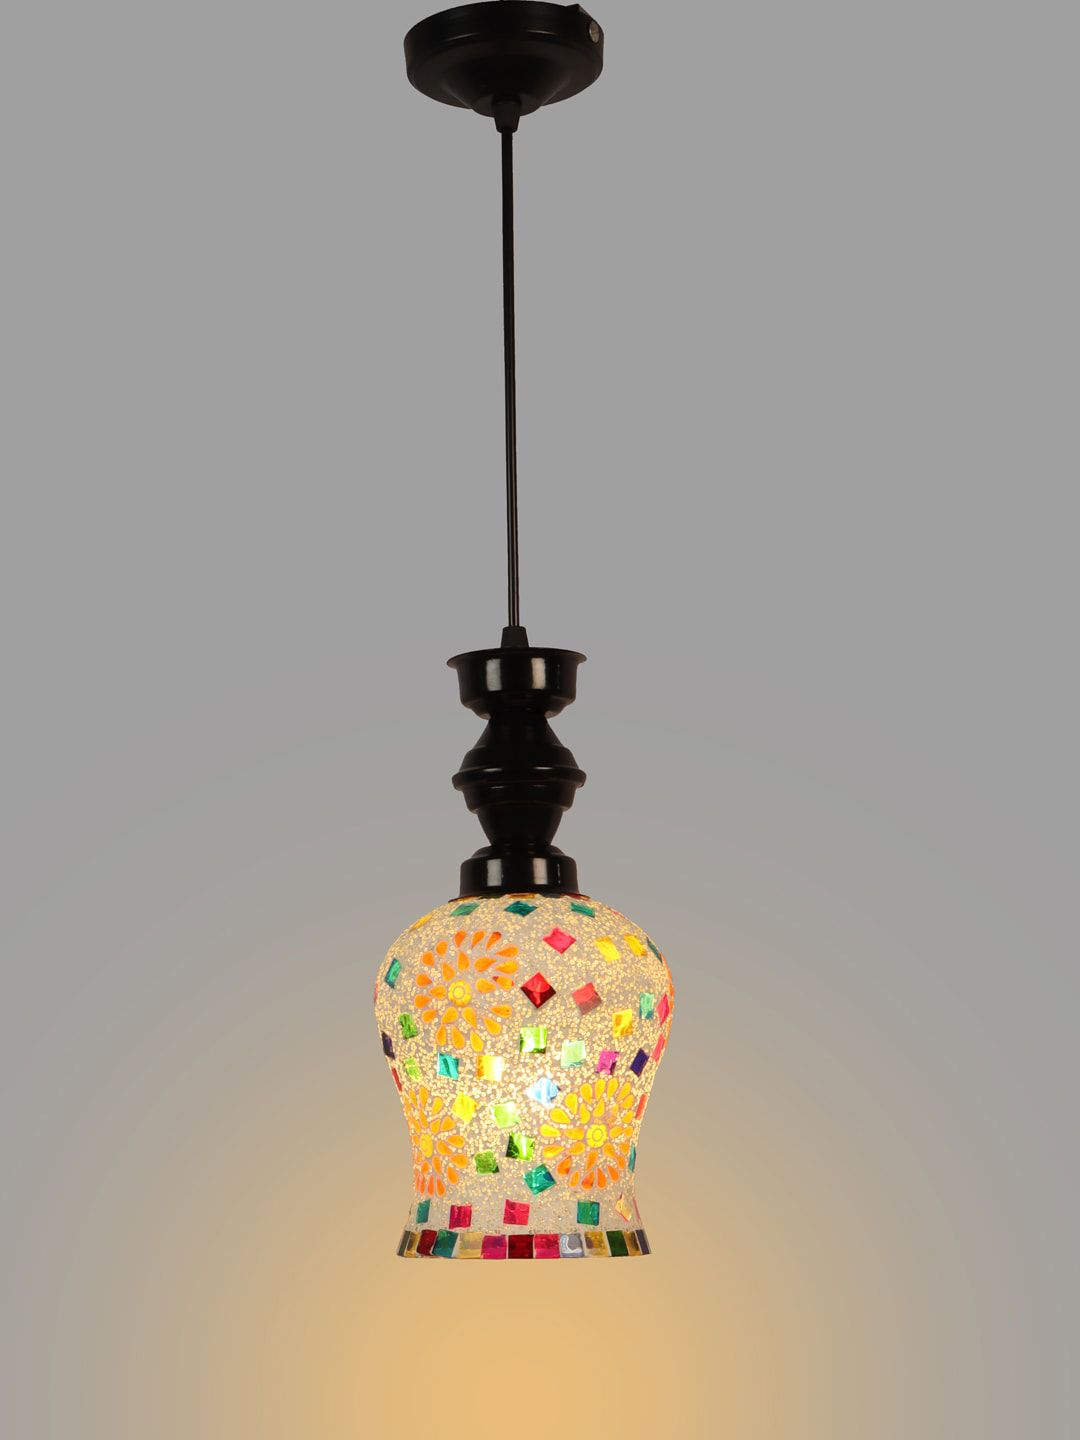 foziq Black & White Textured Ceiling Lamps Price in India